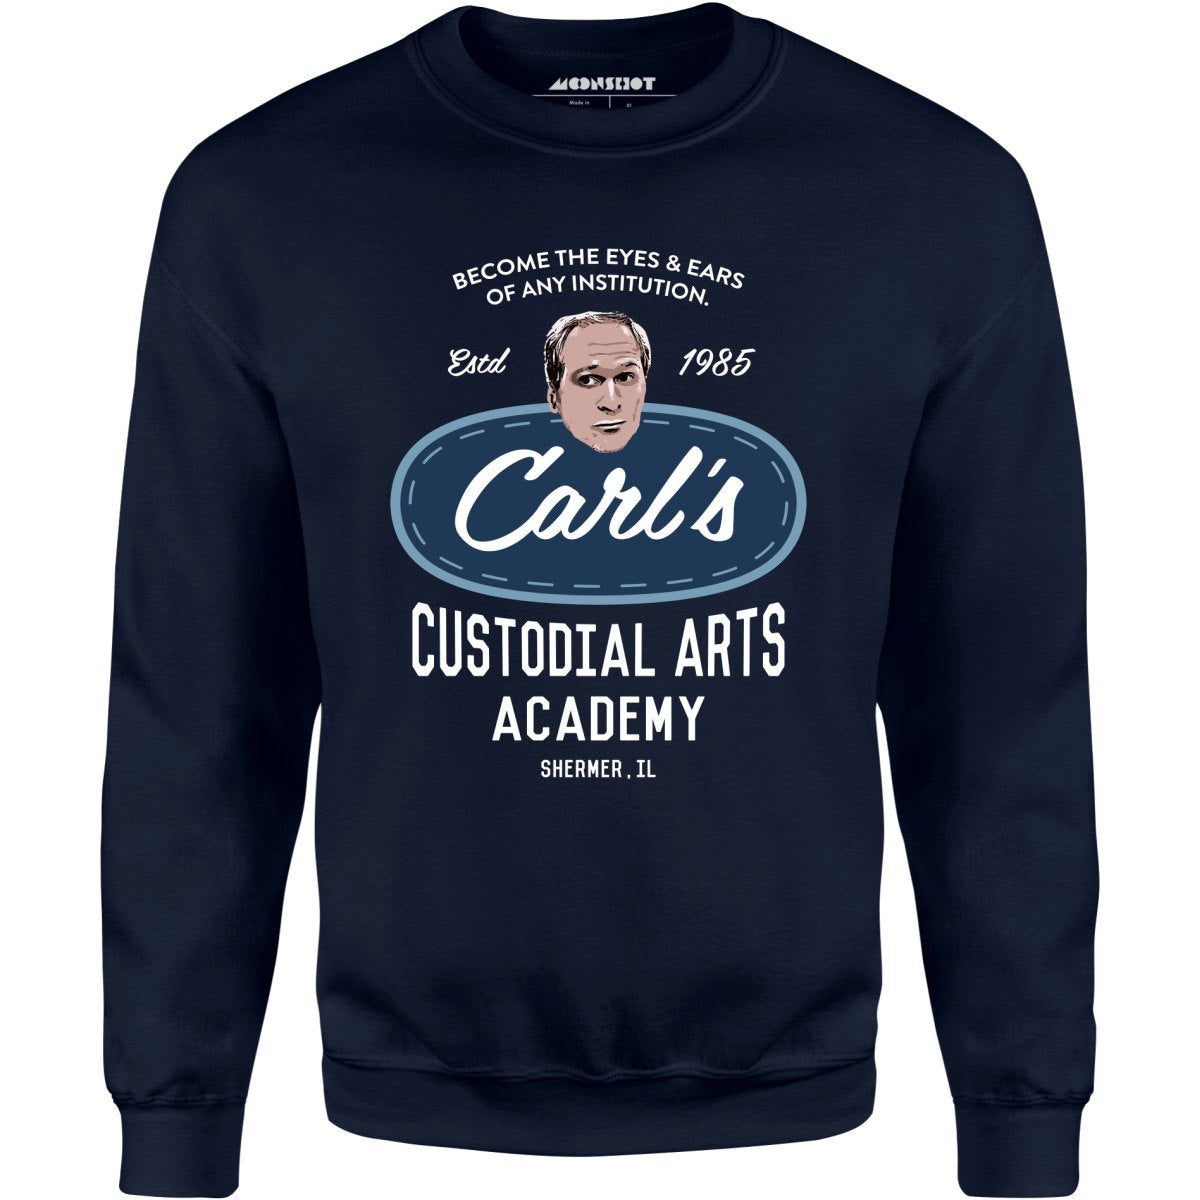 Carl's Custodial Arts Academy - Breakfast Club - Unisex Sweatshirt